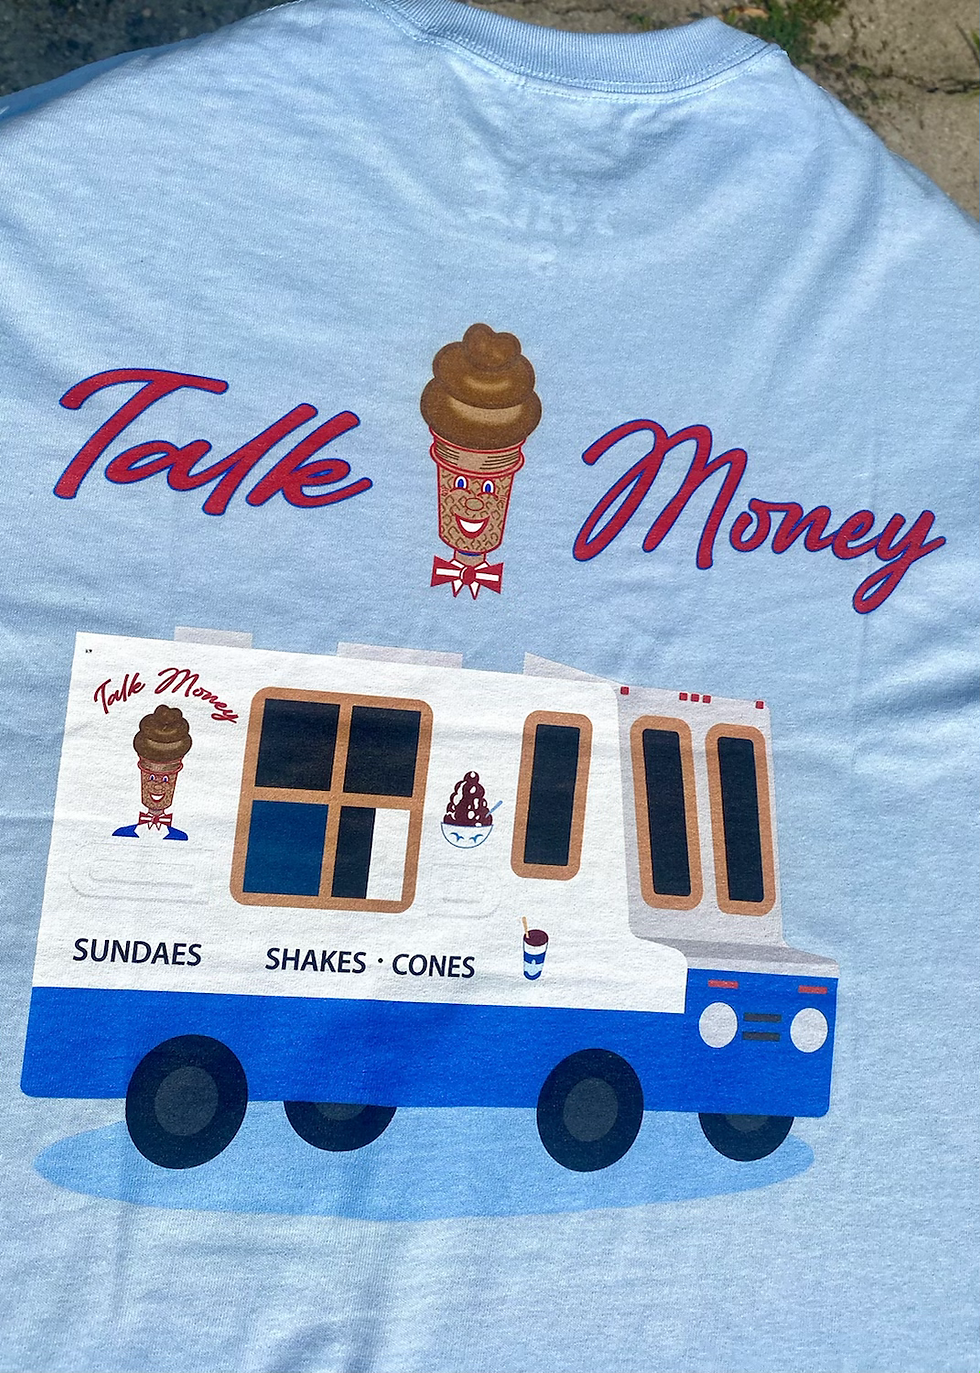 bridgette shaffer recommends money talks ice cream pic